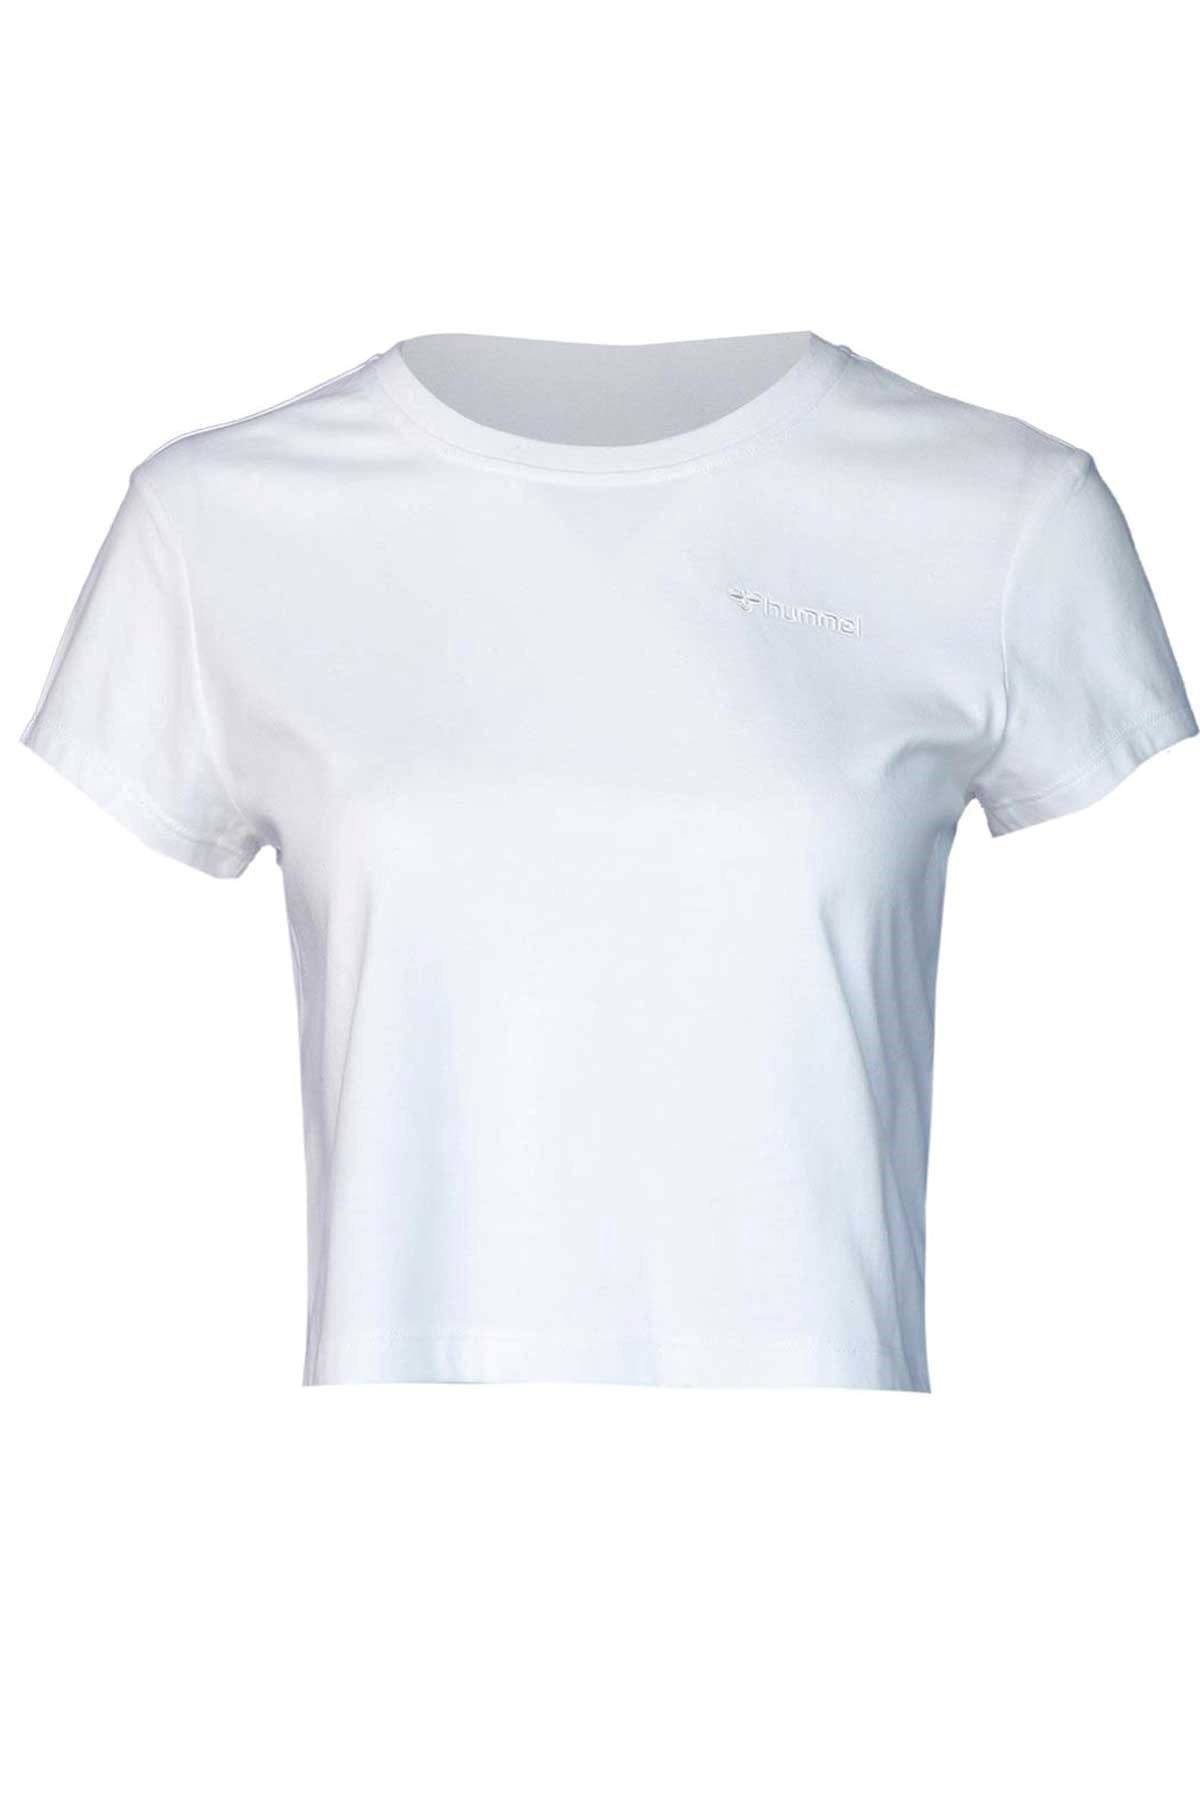 Hummel Hmlt-Mt Emmı Short T-Shırt Kadın Beyaz Tişört - 911681-9001